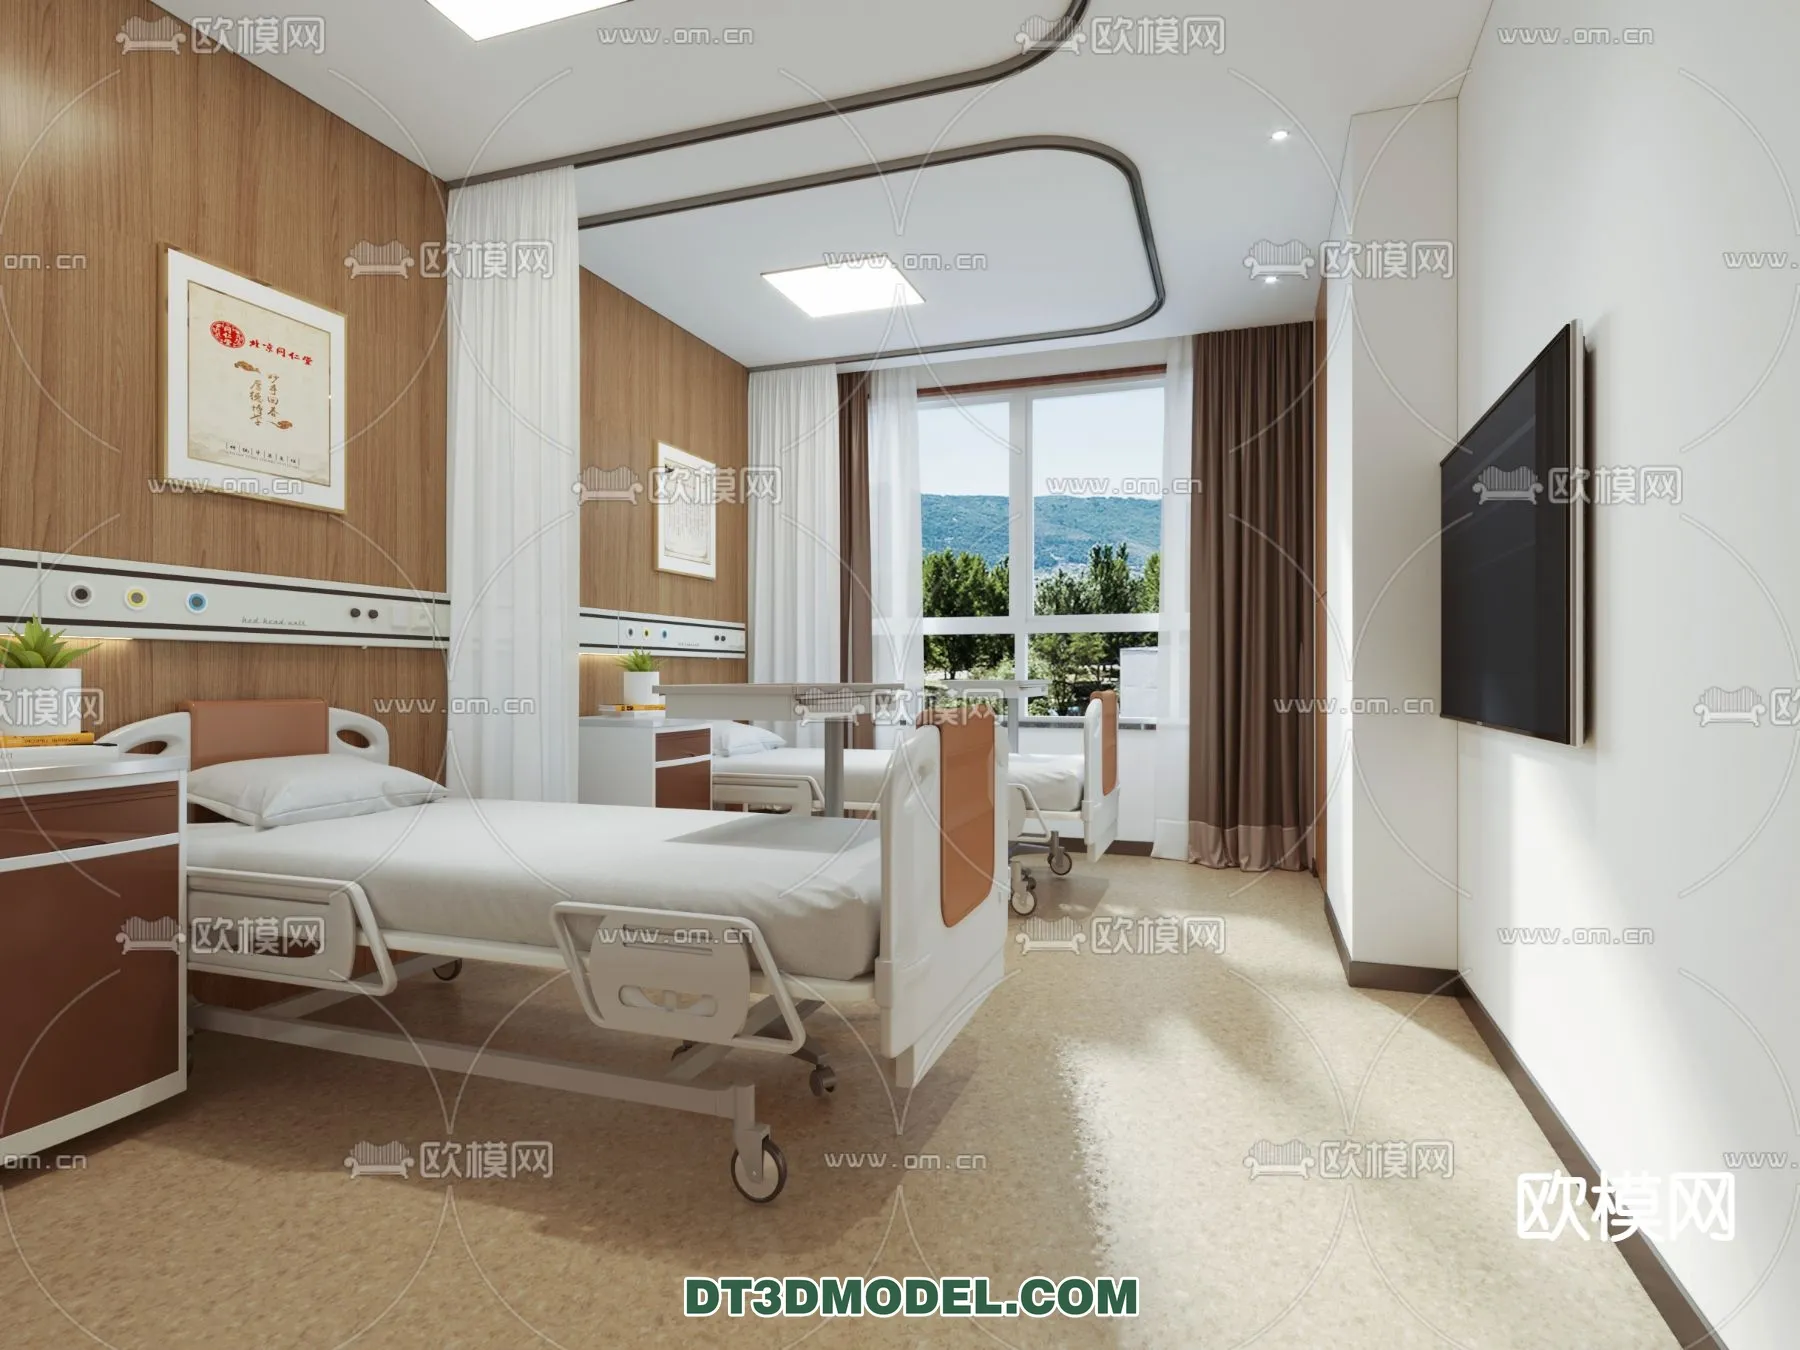 HOSPITAL 3D SCENES – MODERN – 0122